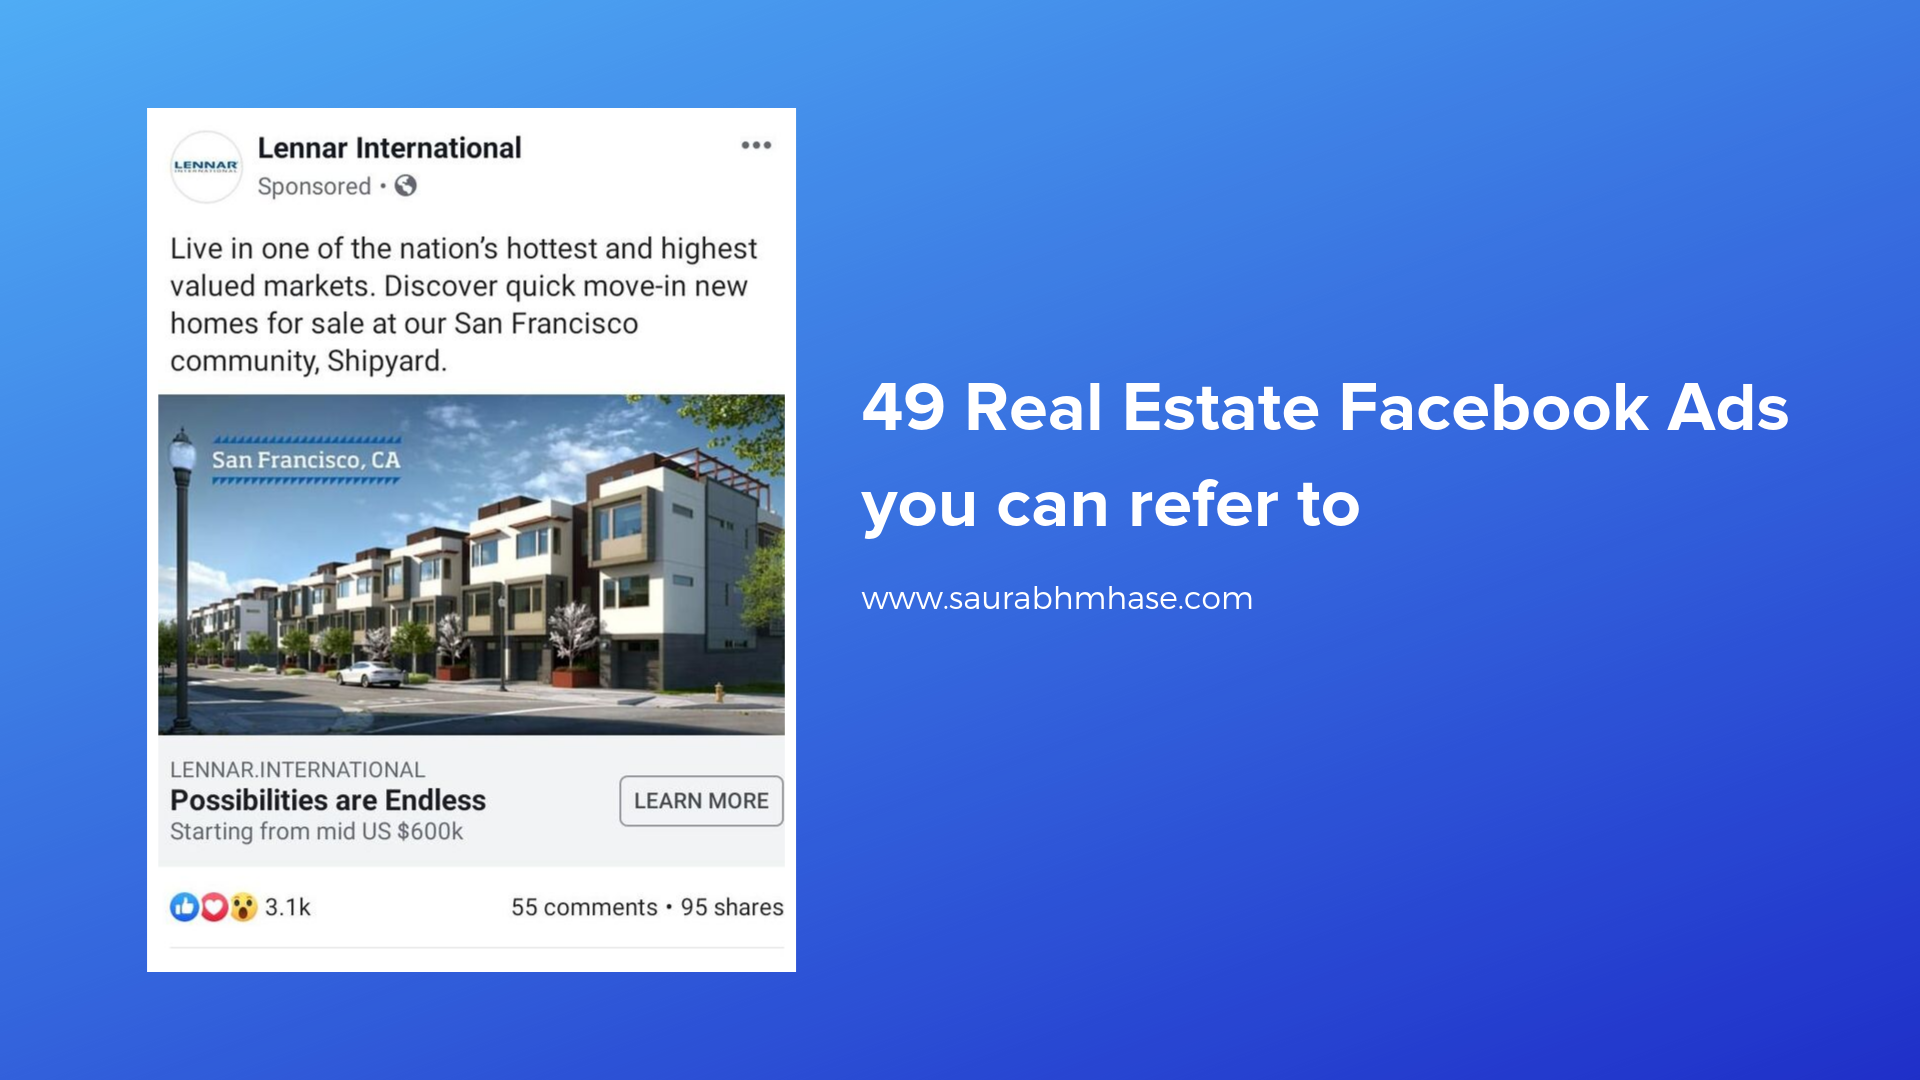 Real Estate Facebook Ads Saurabhmhase - Real Estate Carousel Ads On Facebook Mumbai - HD Wallpaper 